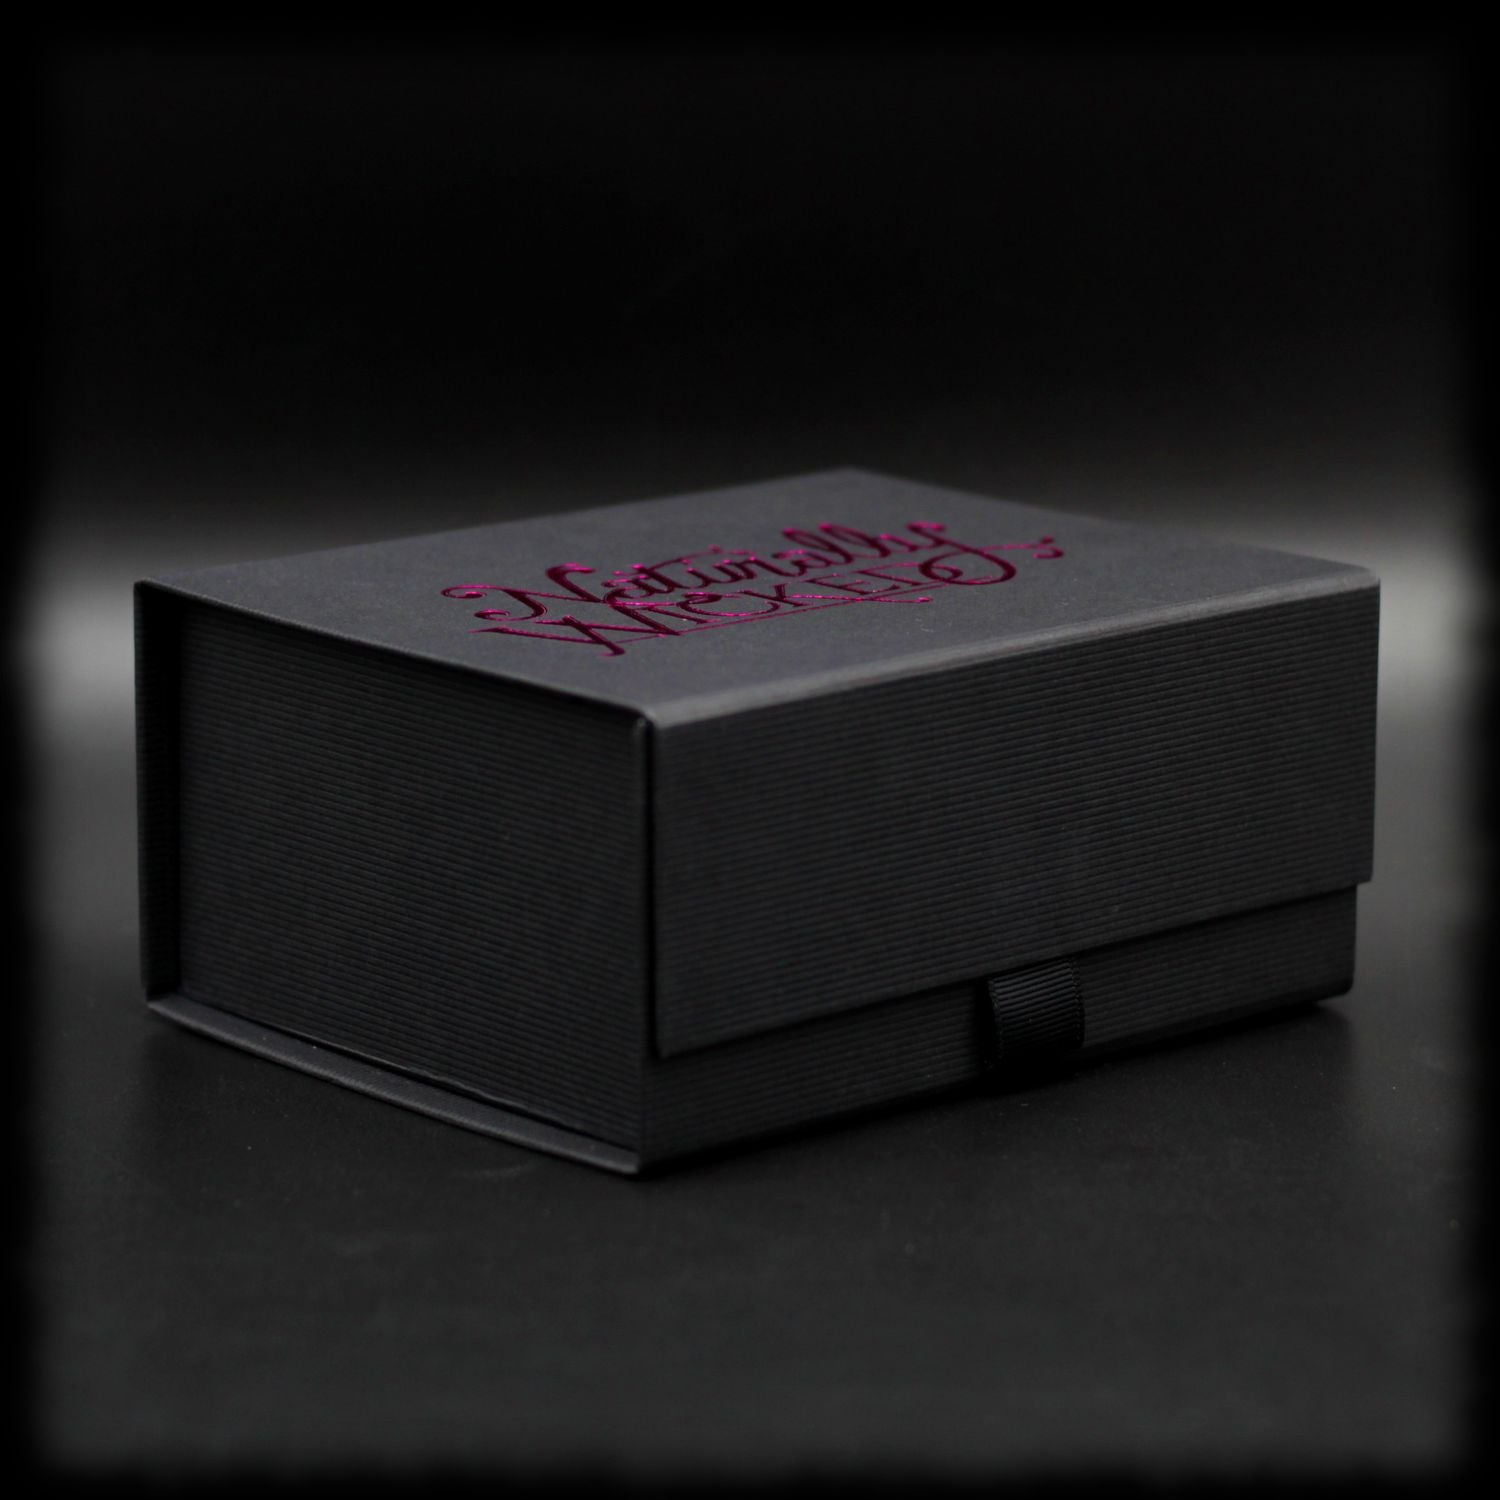 Naturally Wicked Original 3 Step Facial Kit Box; Dark Black With Bright Metallic Pink Text